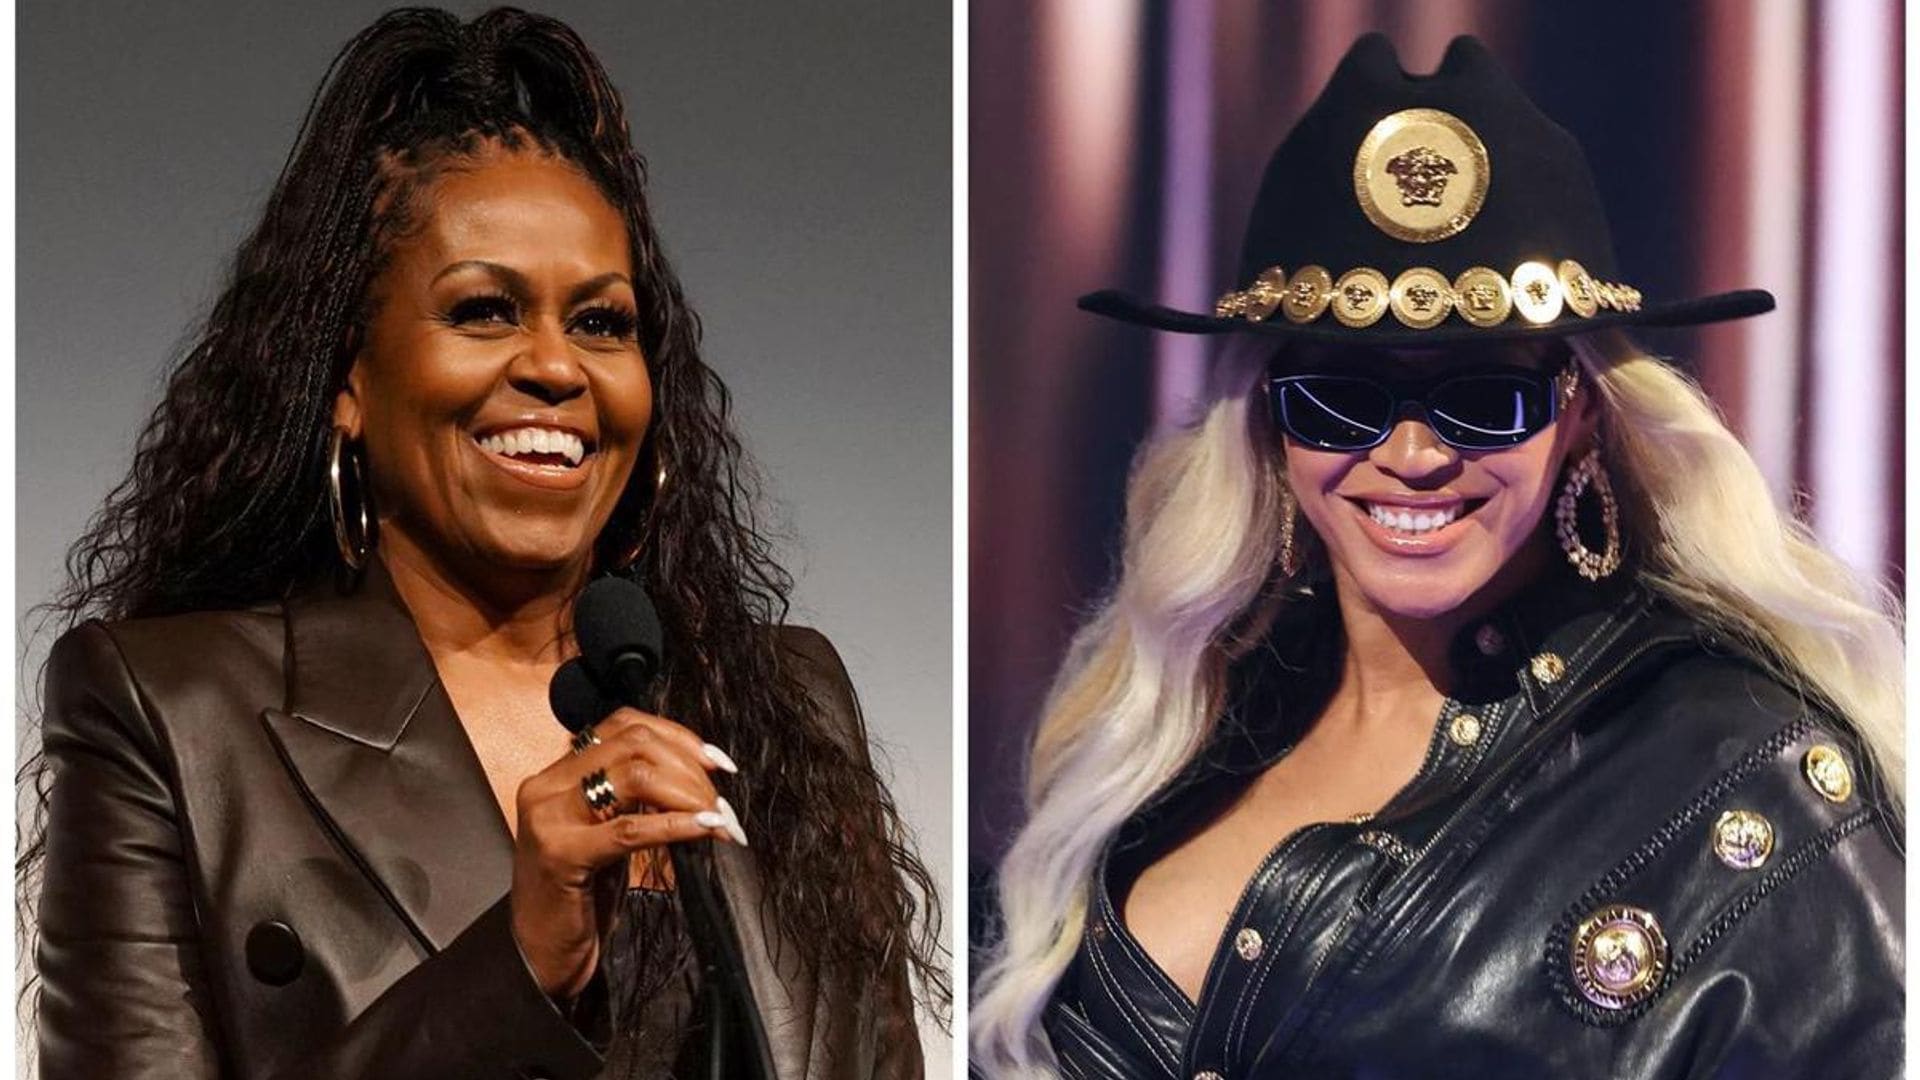 Michelle Obama endorses Beyoncé’s ‘Cowboy Carter’ after backlash